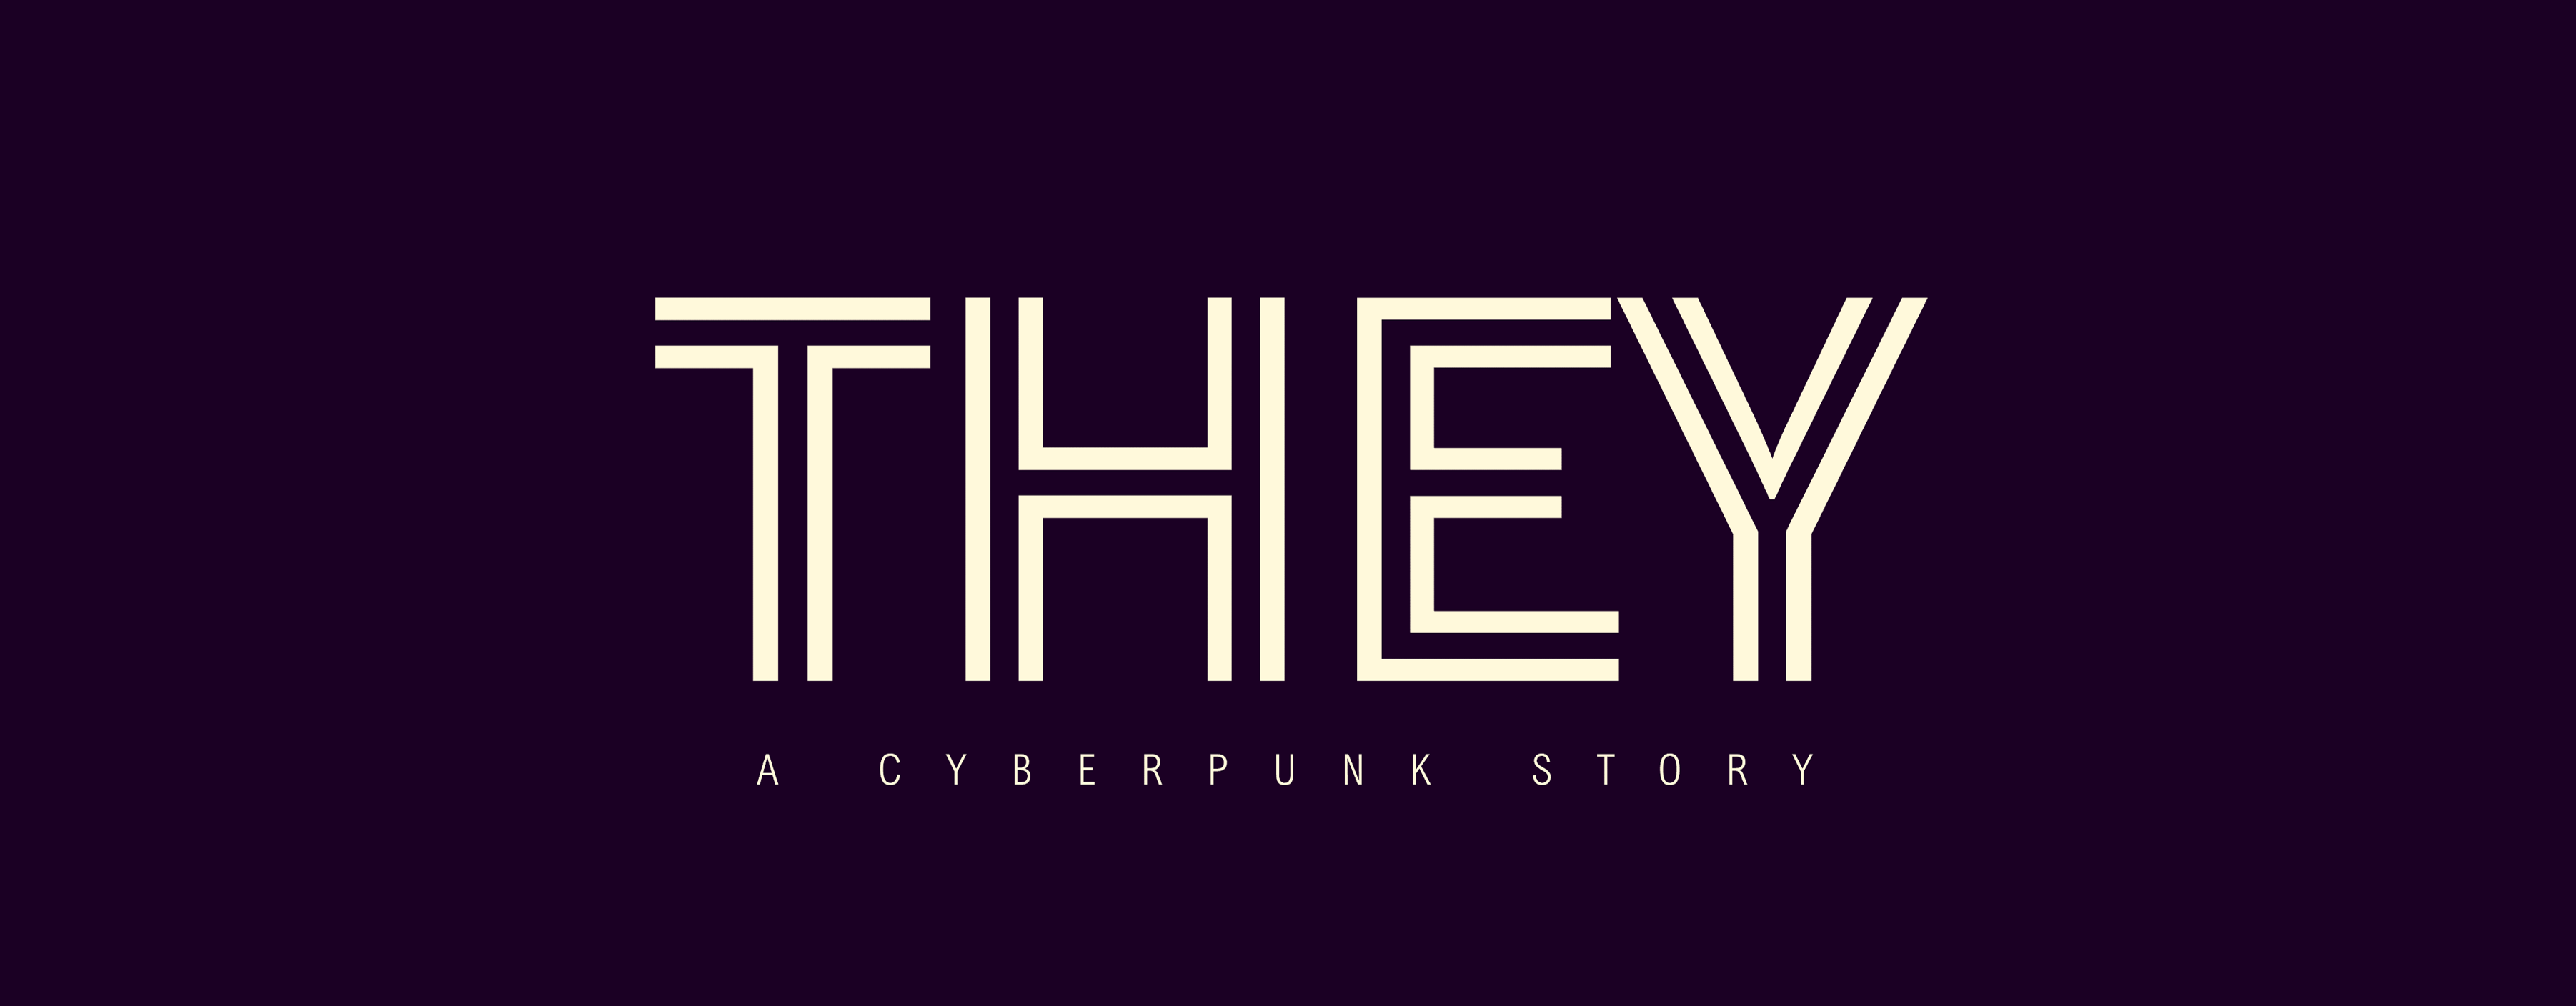 They: A Cyberpunk Story